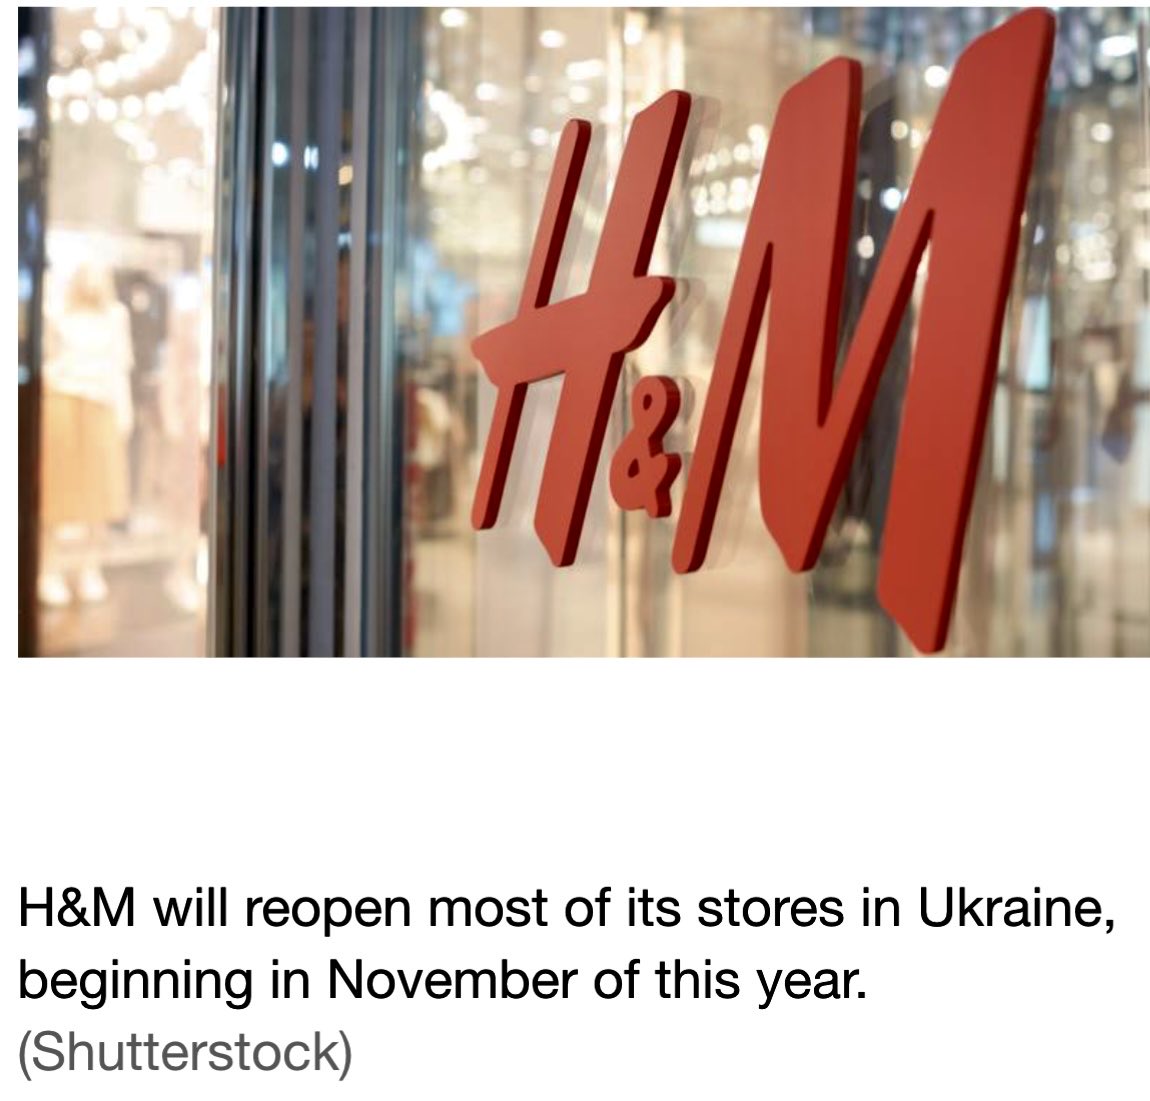 H&M to Reopen Most #Ukrainian Stores
Via @BoF 

#fashion #retail #retailtech #supplychain #HM 

👉businessoffashion.com/news/global-ma…

#BoF #futureofretail #fashiontech #warehouse 

@PawlowskiMario @mvollmer1 @anand_narang @FrRonconi @SpirosMargaris @Nicochan33 @jblefevre60 @CurieuxExplorer…